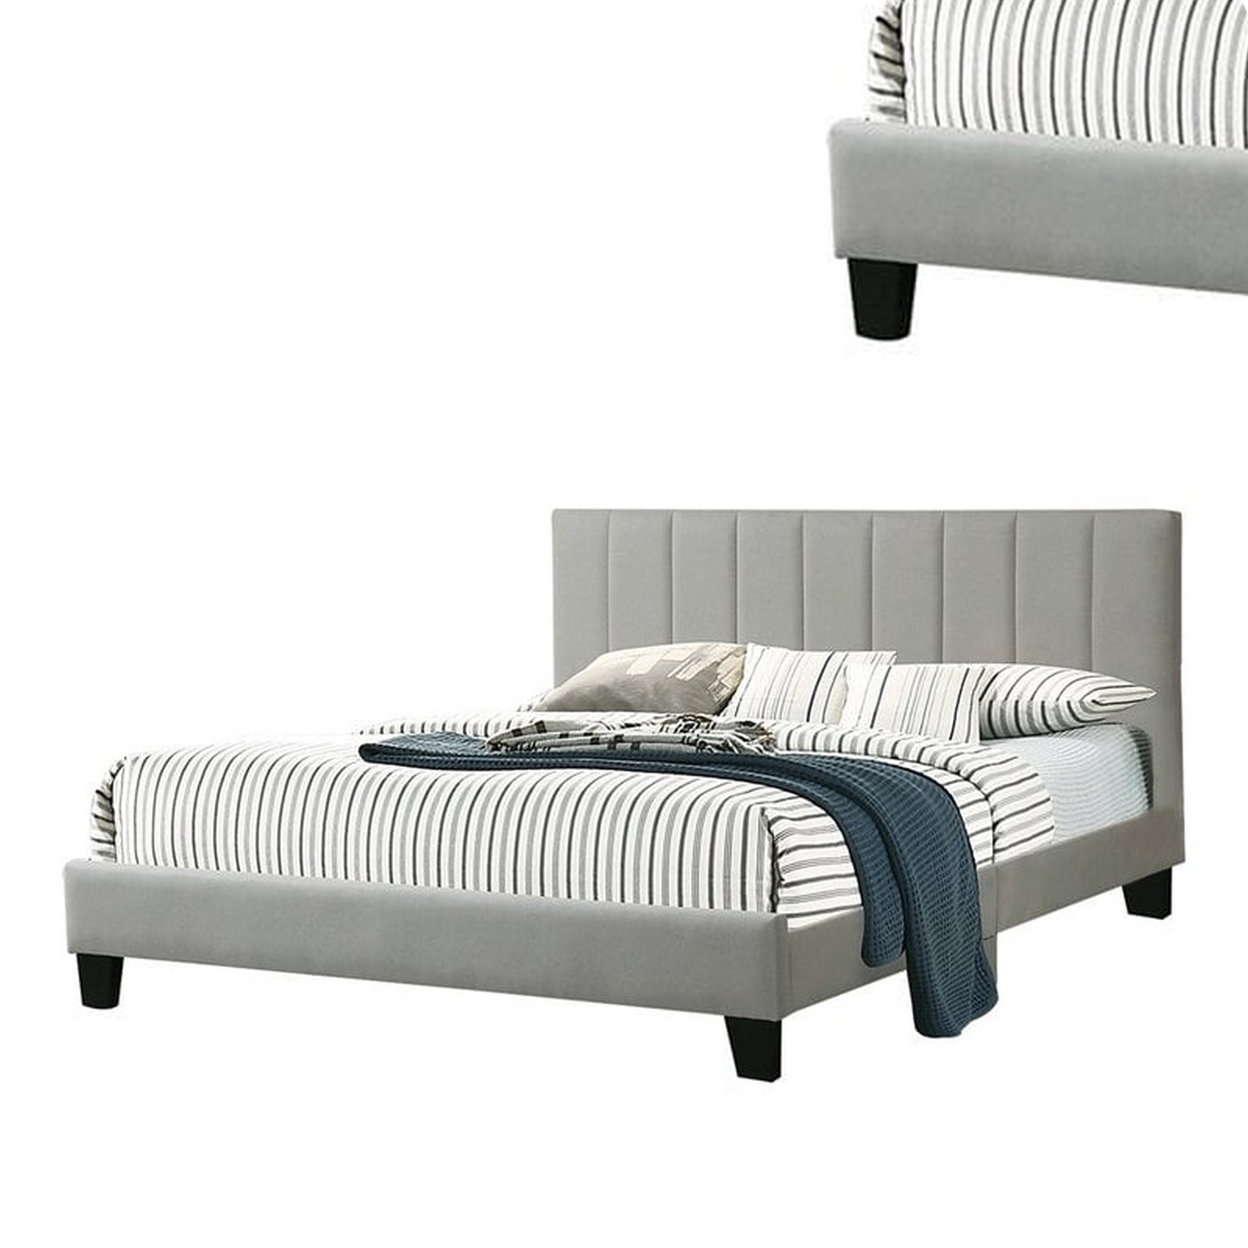 Eve Platform California King Bed, Deep Channel Tufted Light Gray Upholstery- Saltoro Sherpi